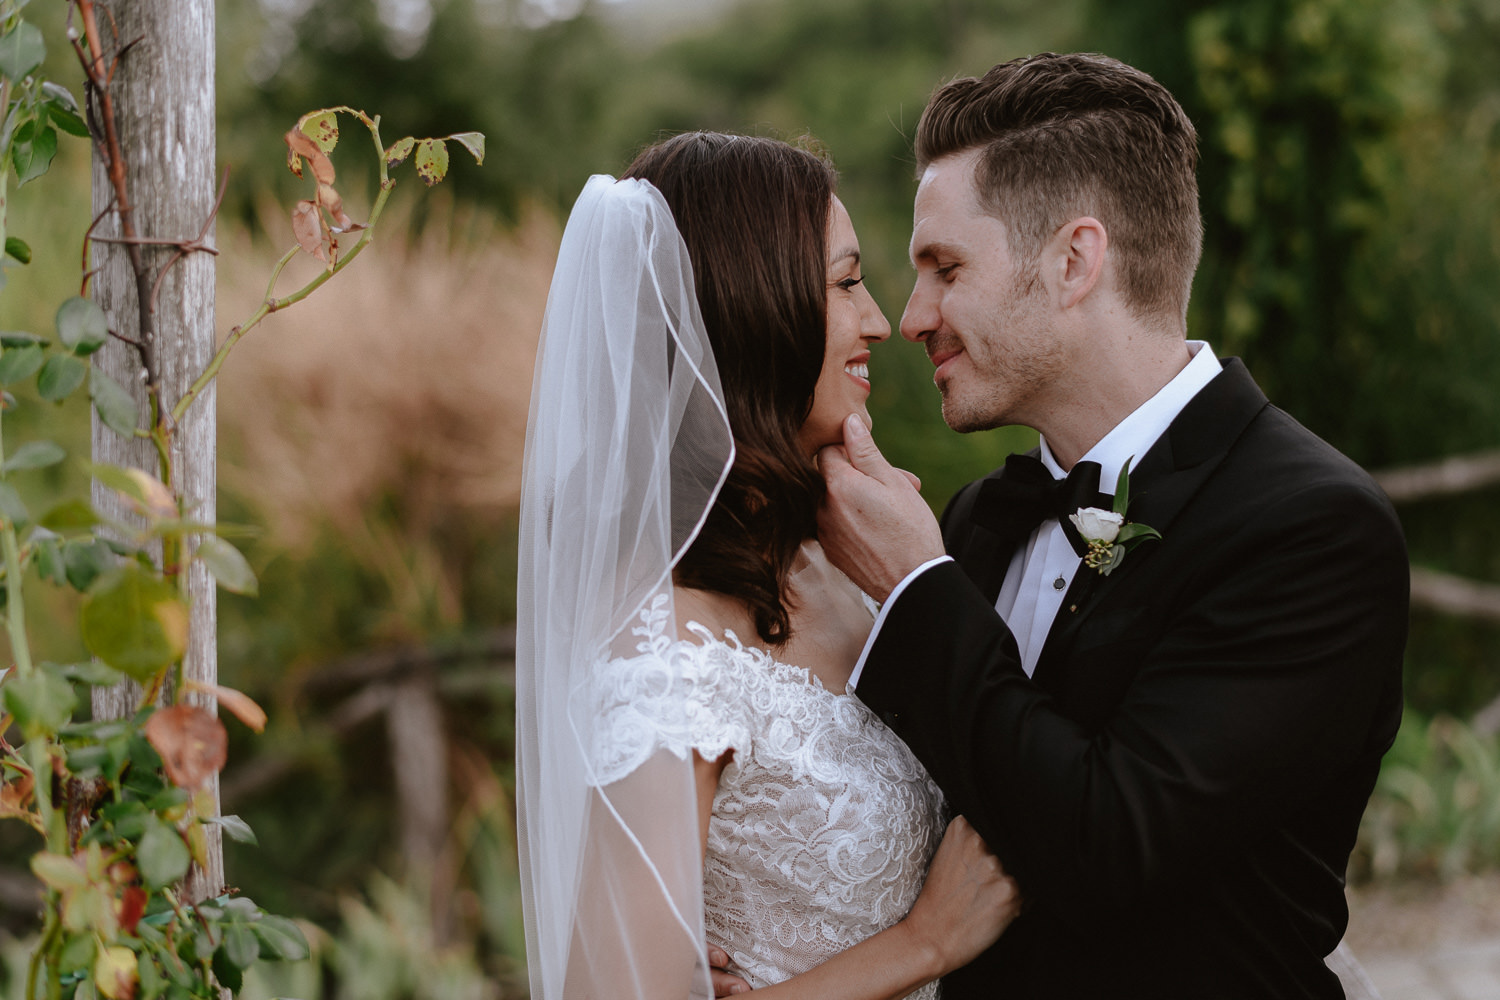 intimate wedding private villa tuscany photographer bride groom intimate portrait photos